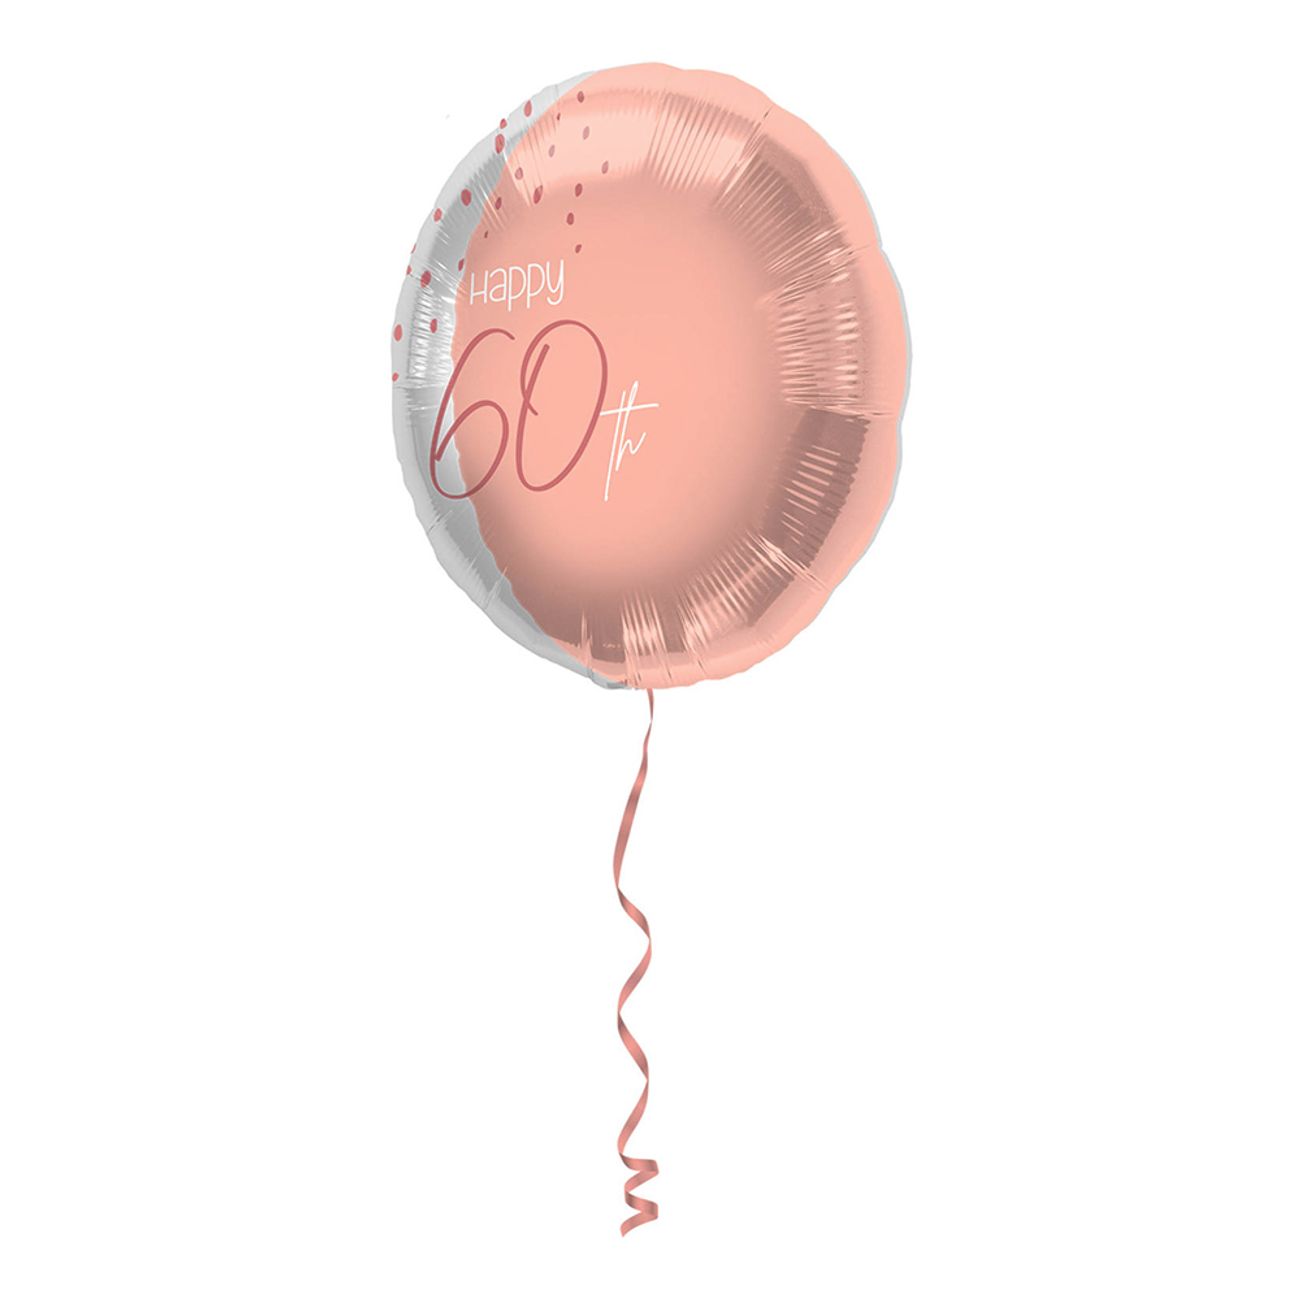 folieballong-happy-60th-lush-blush-1